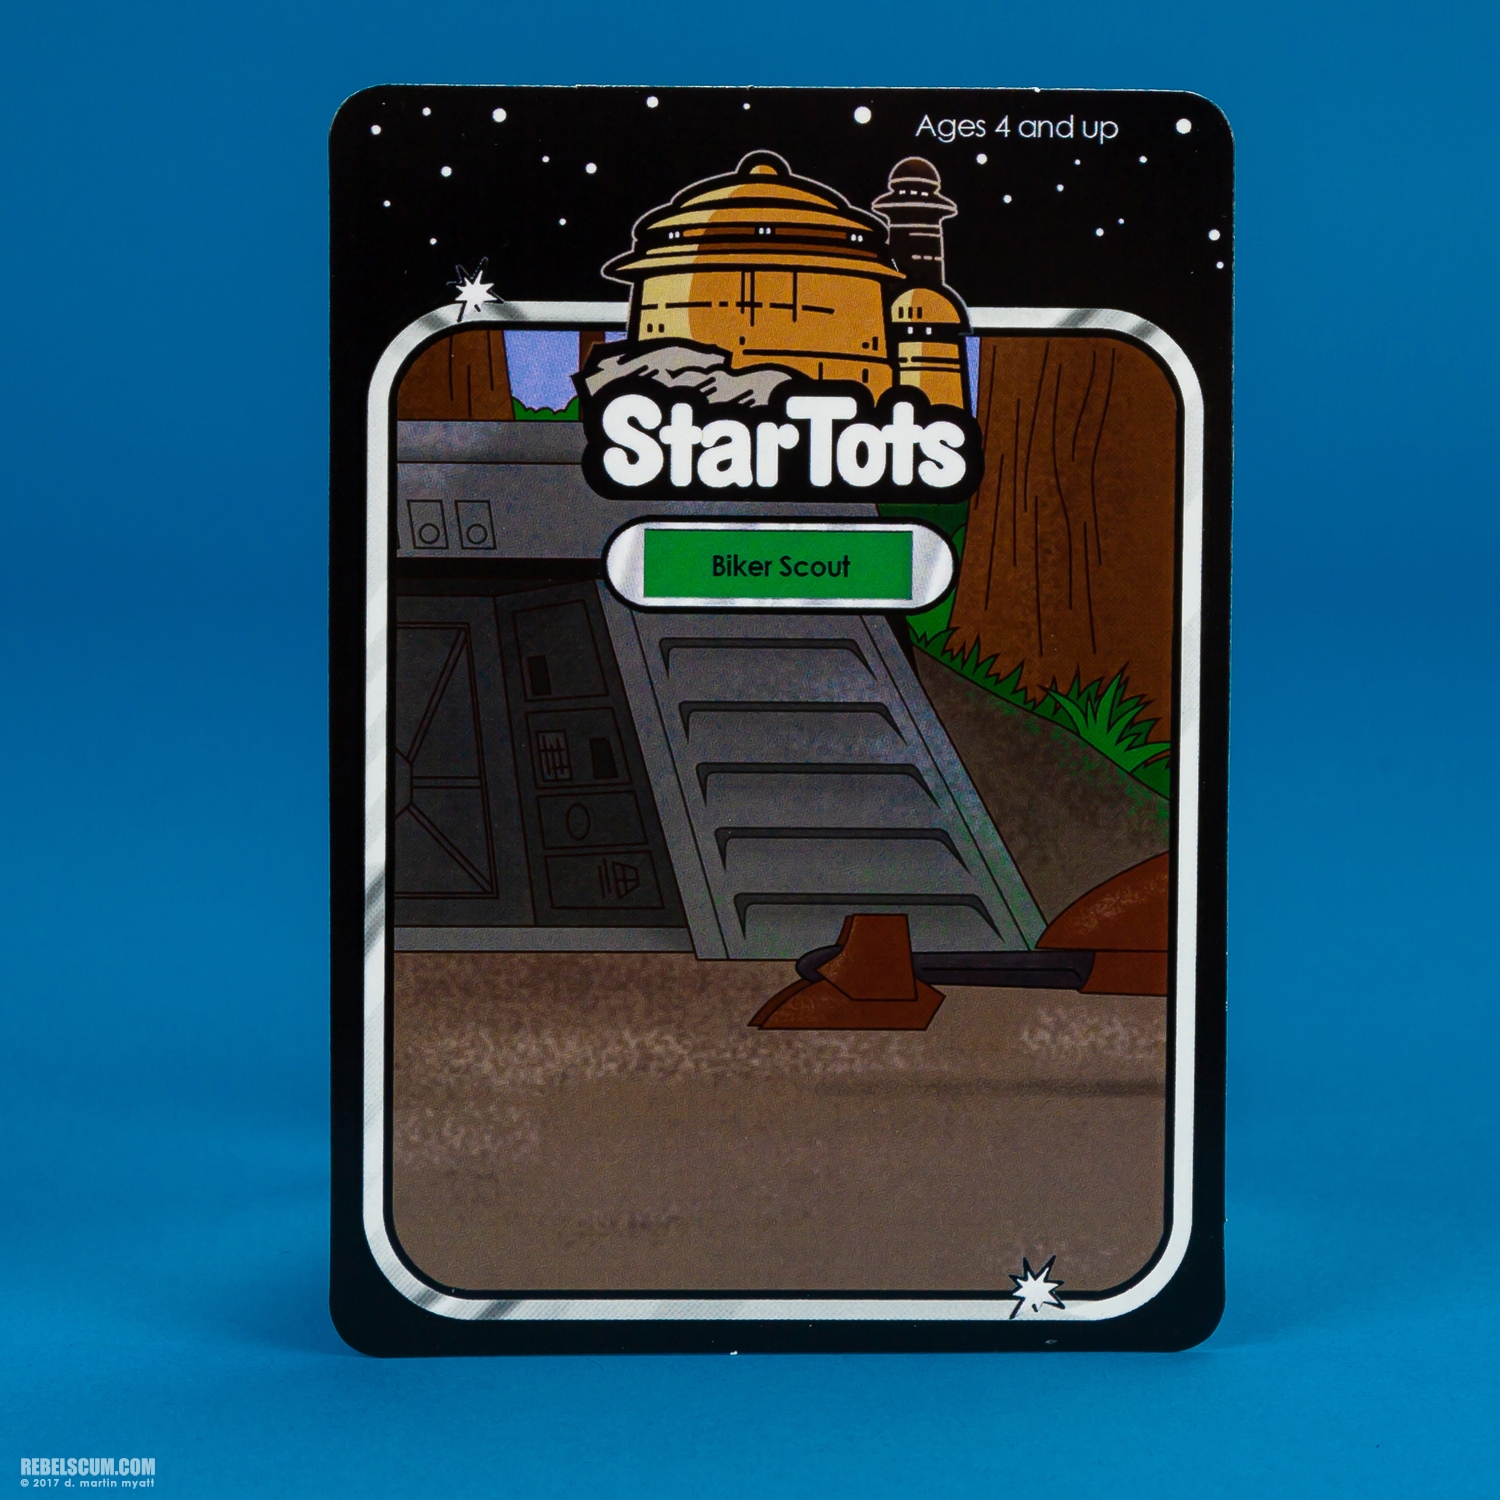 Star-Tots-Star-Wars-Celebration-Collecting-Track-2017-017.jpg